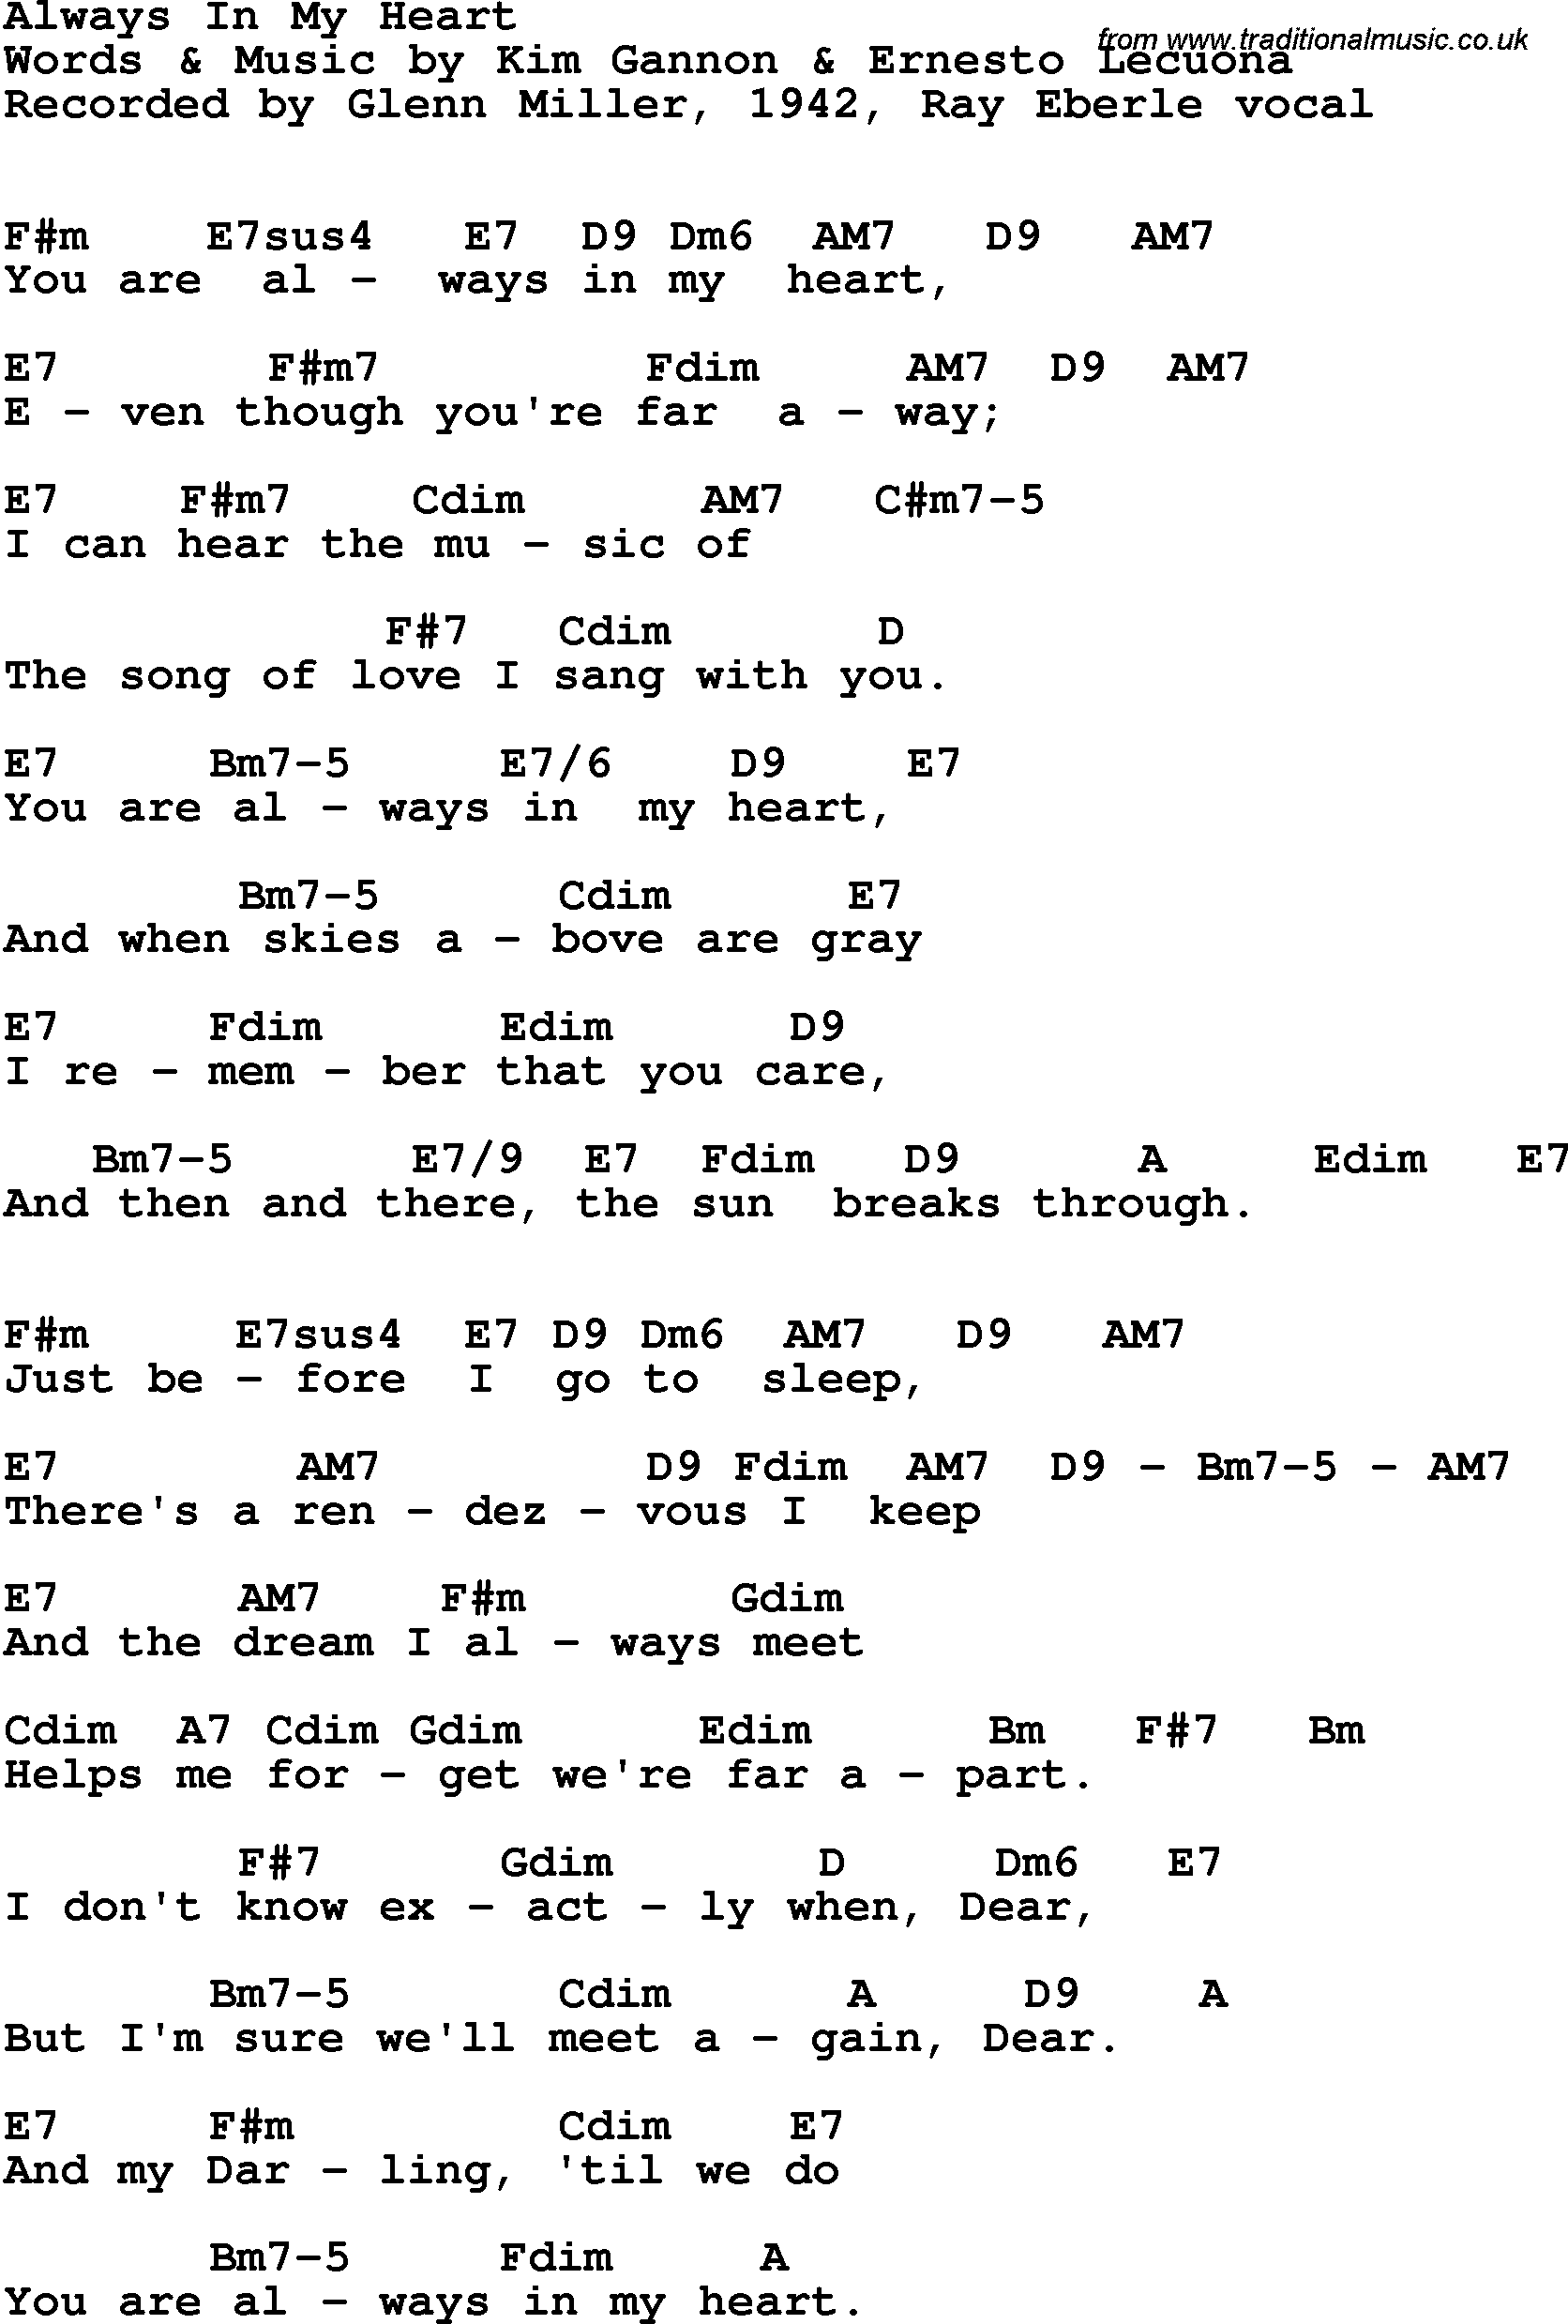 Song Lyrics with guitar chords for Always In My Heart - Glenn Miller, 1942